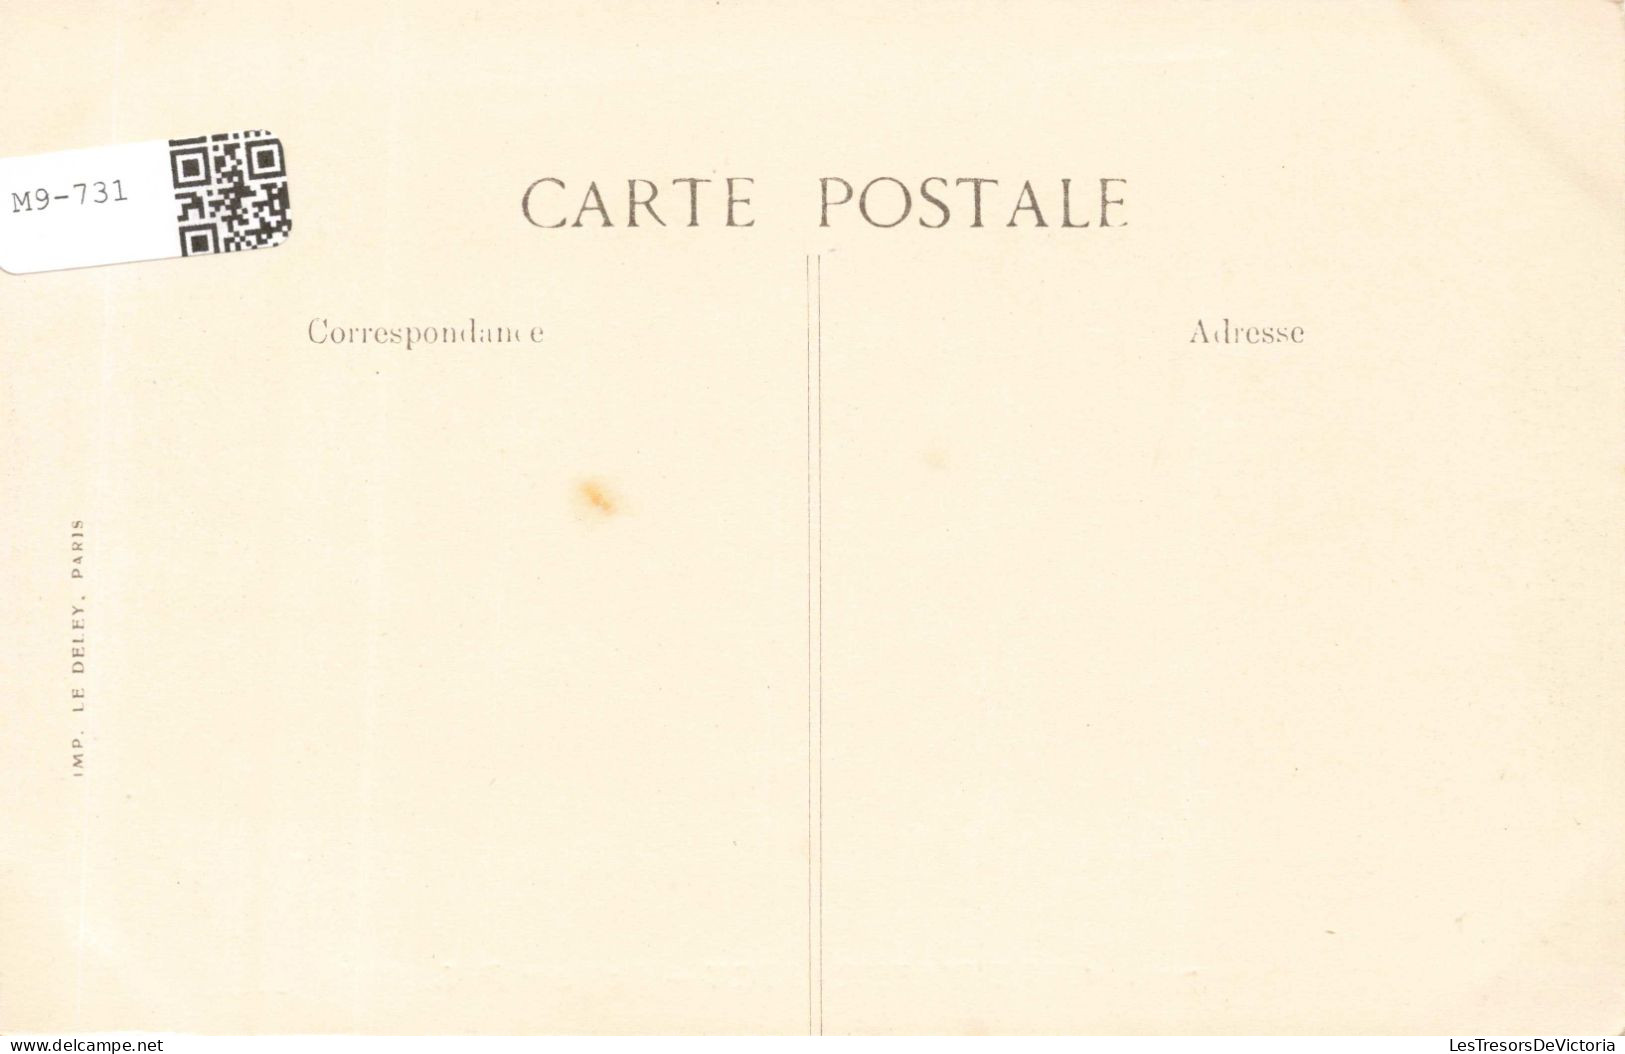 FRANCE - Nice - La Gare - P.L.M - Carte Postale Ancienne - Transport Ferroviaire - Gare